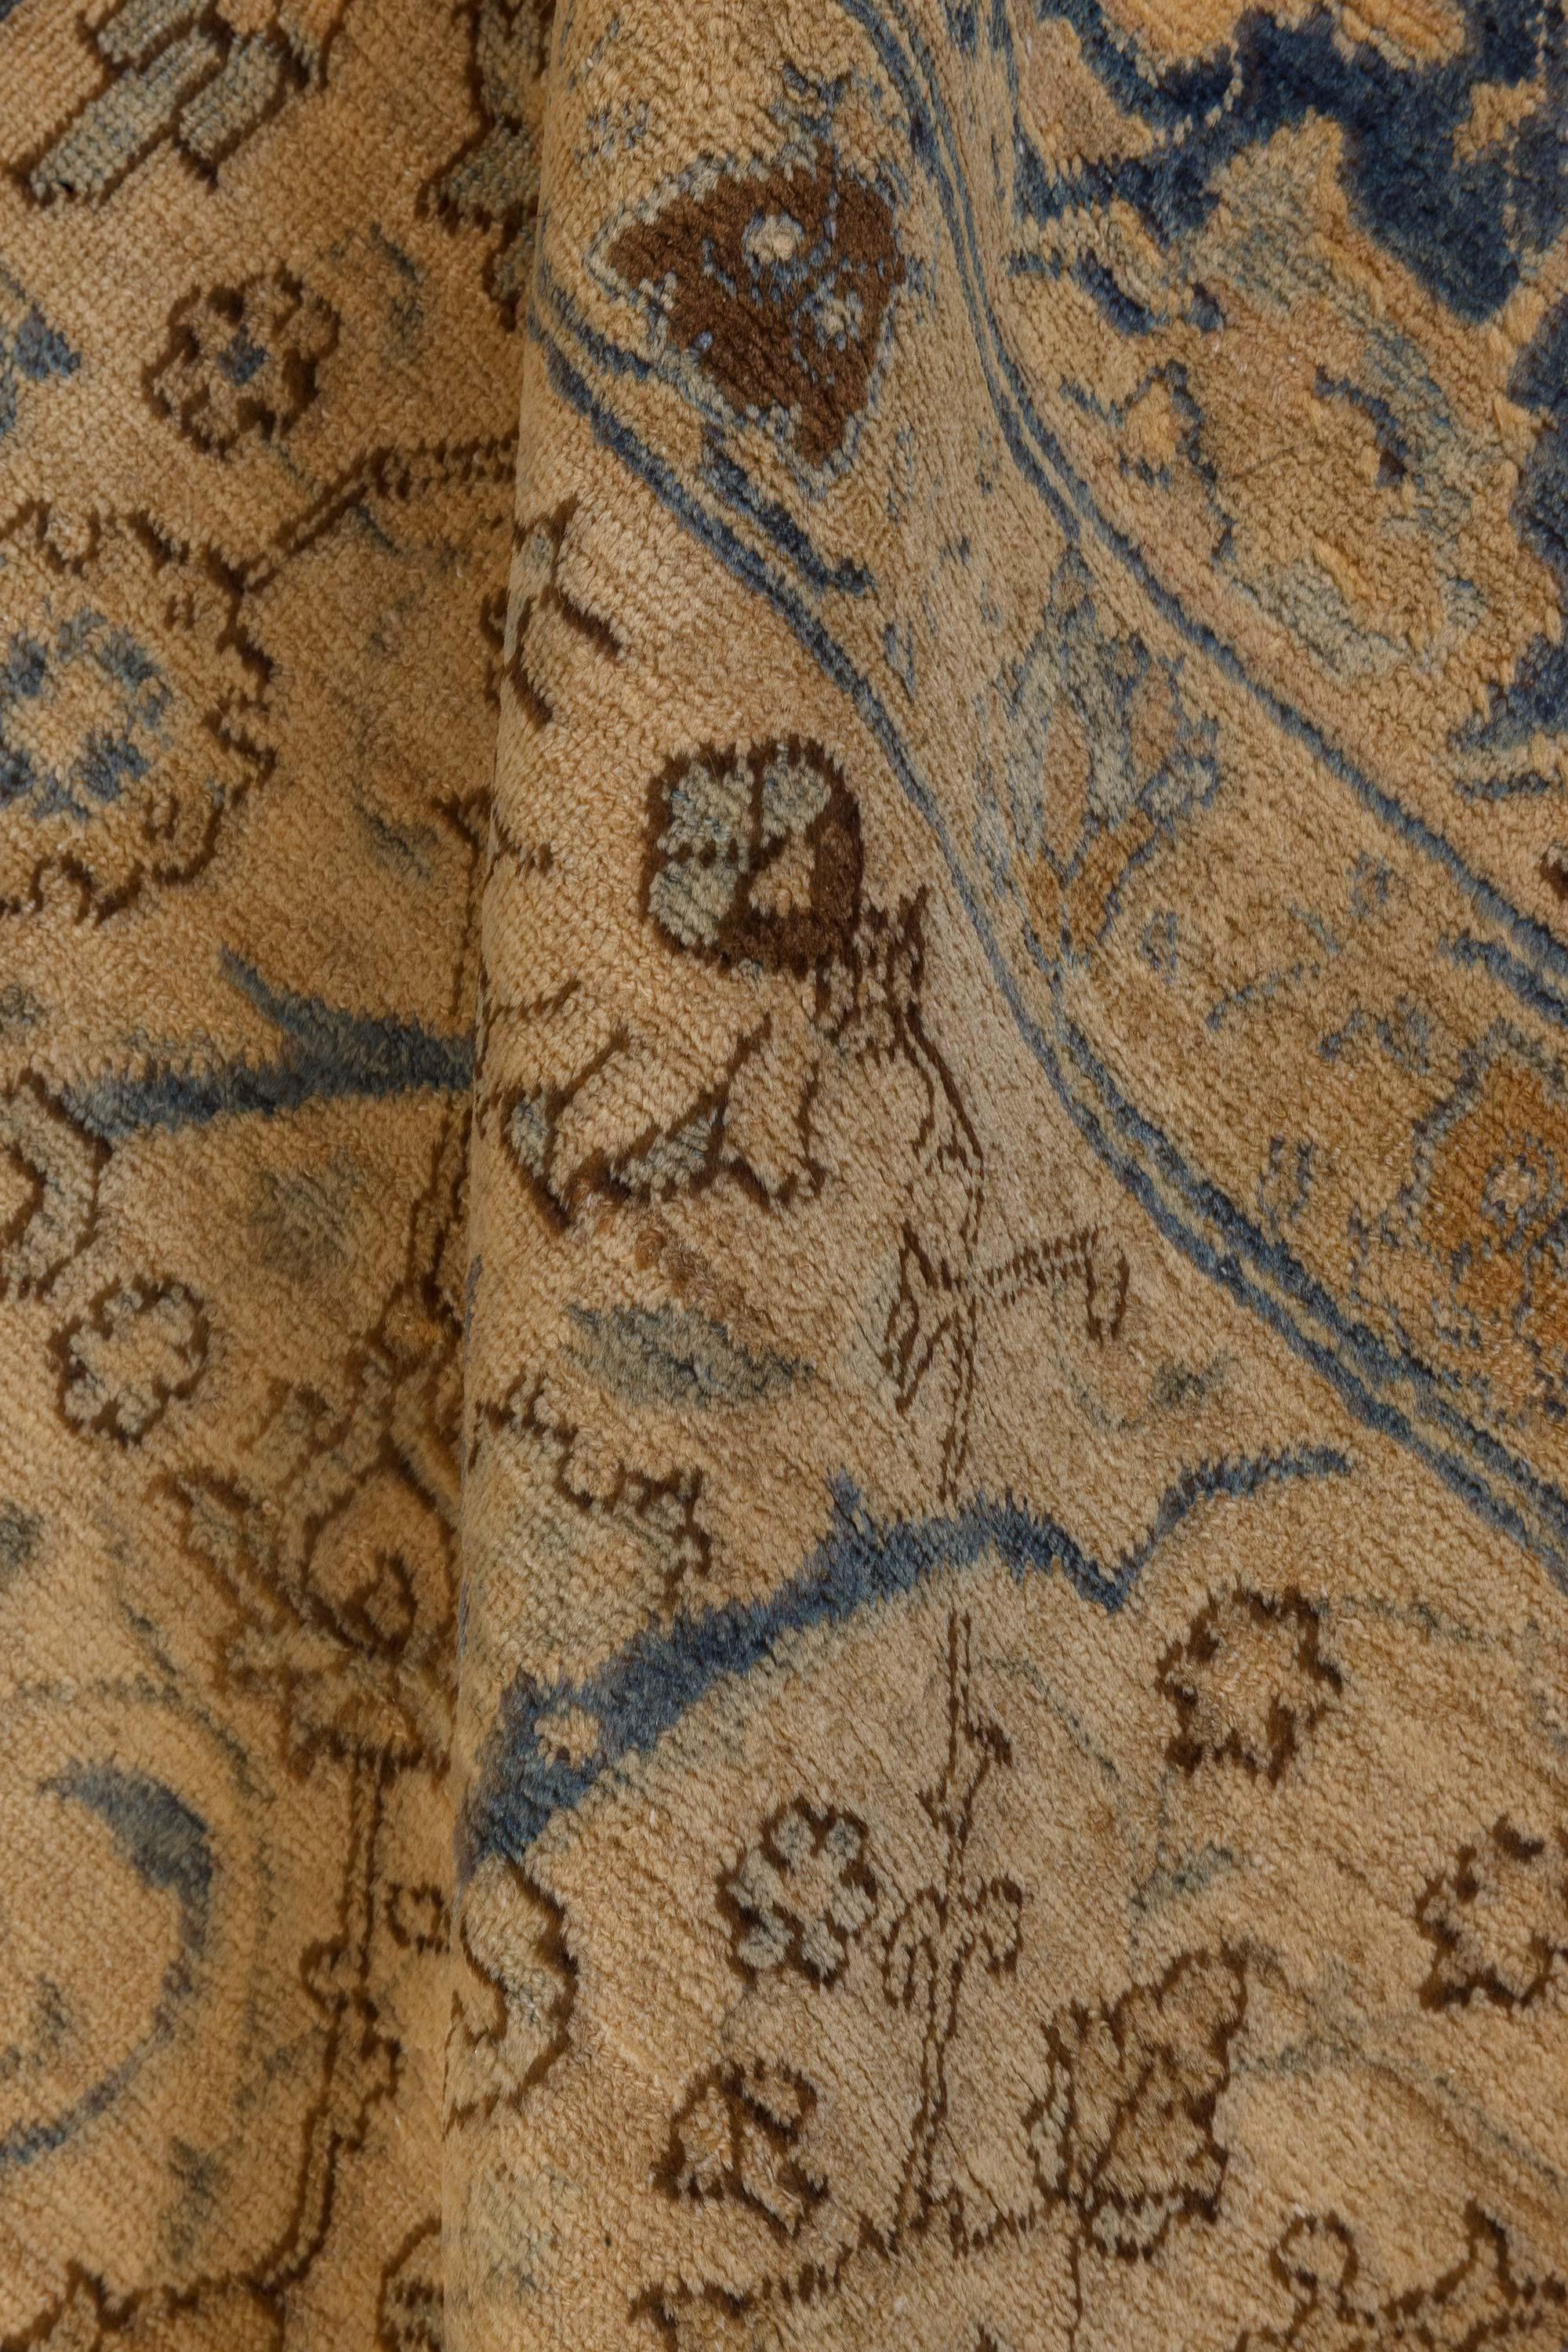 Authentic 19th Century Persian Tabriz Botanic Handmade Wool Rug
Size: 10'9